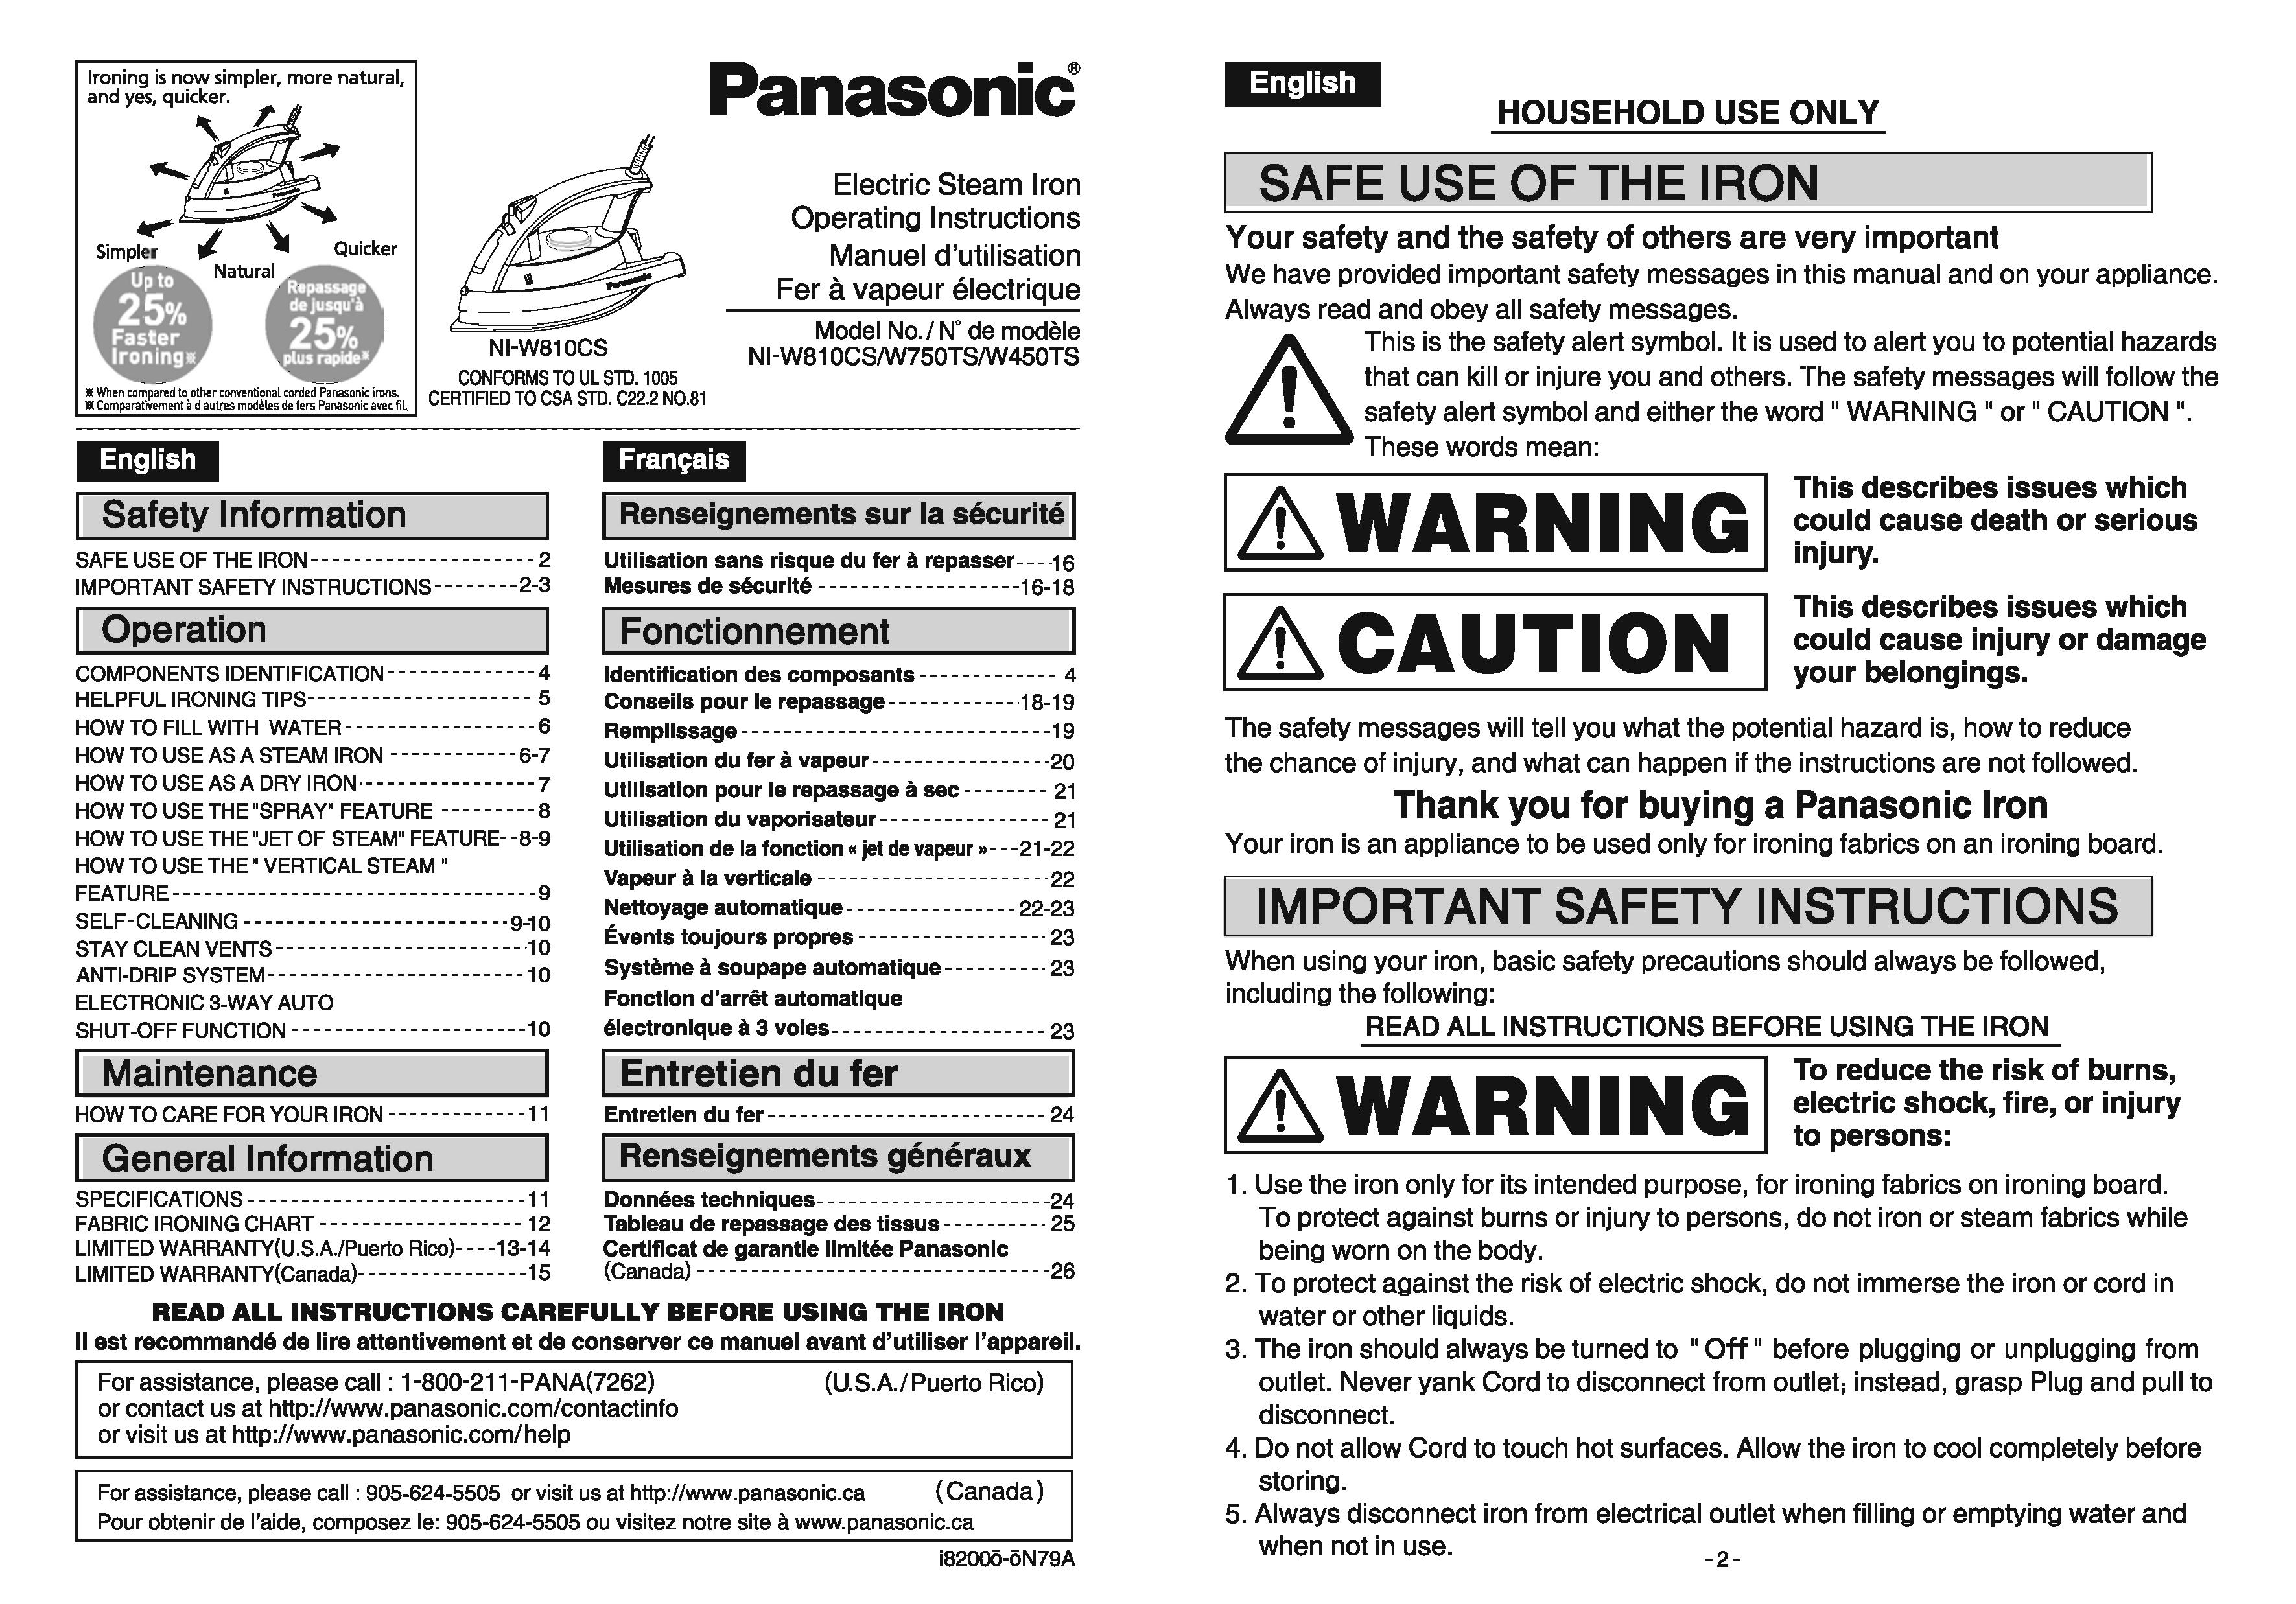 Panasonic NIW750TS Iron User Manual